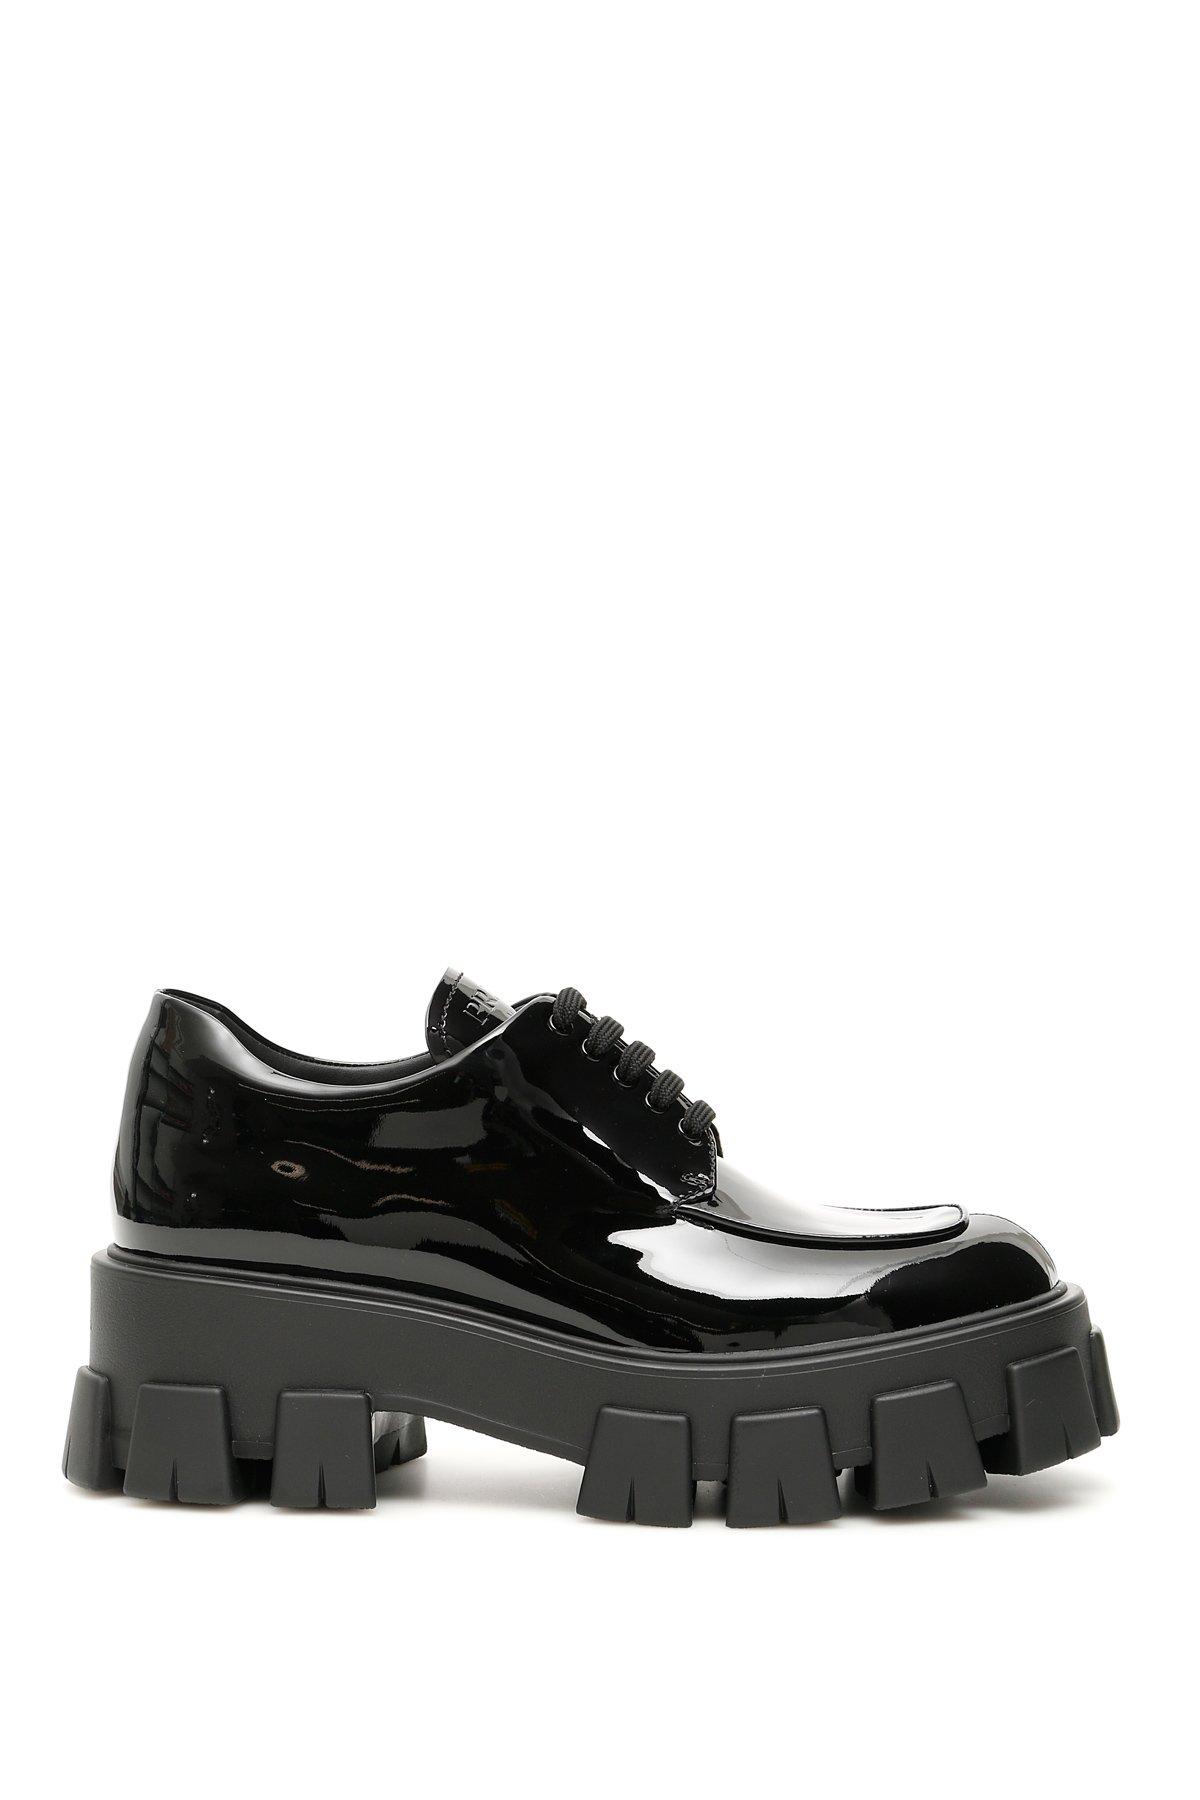 Prada Leather Derby Platform Shoes in Black - Lyst